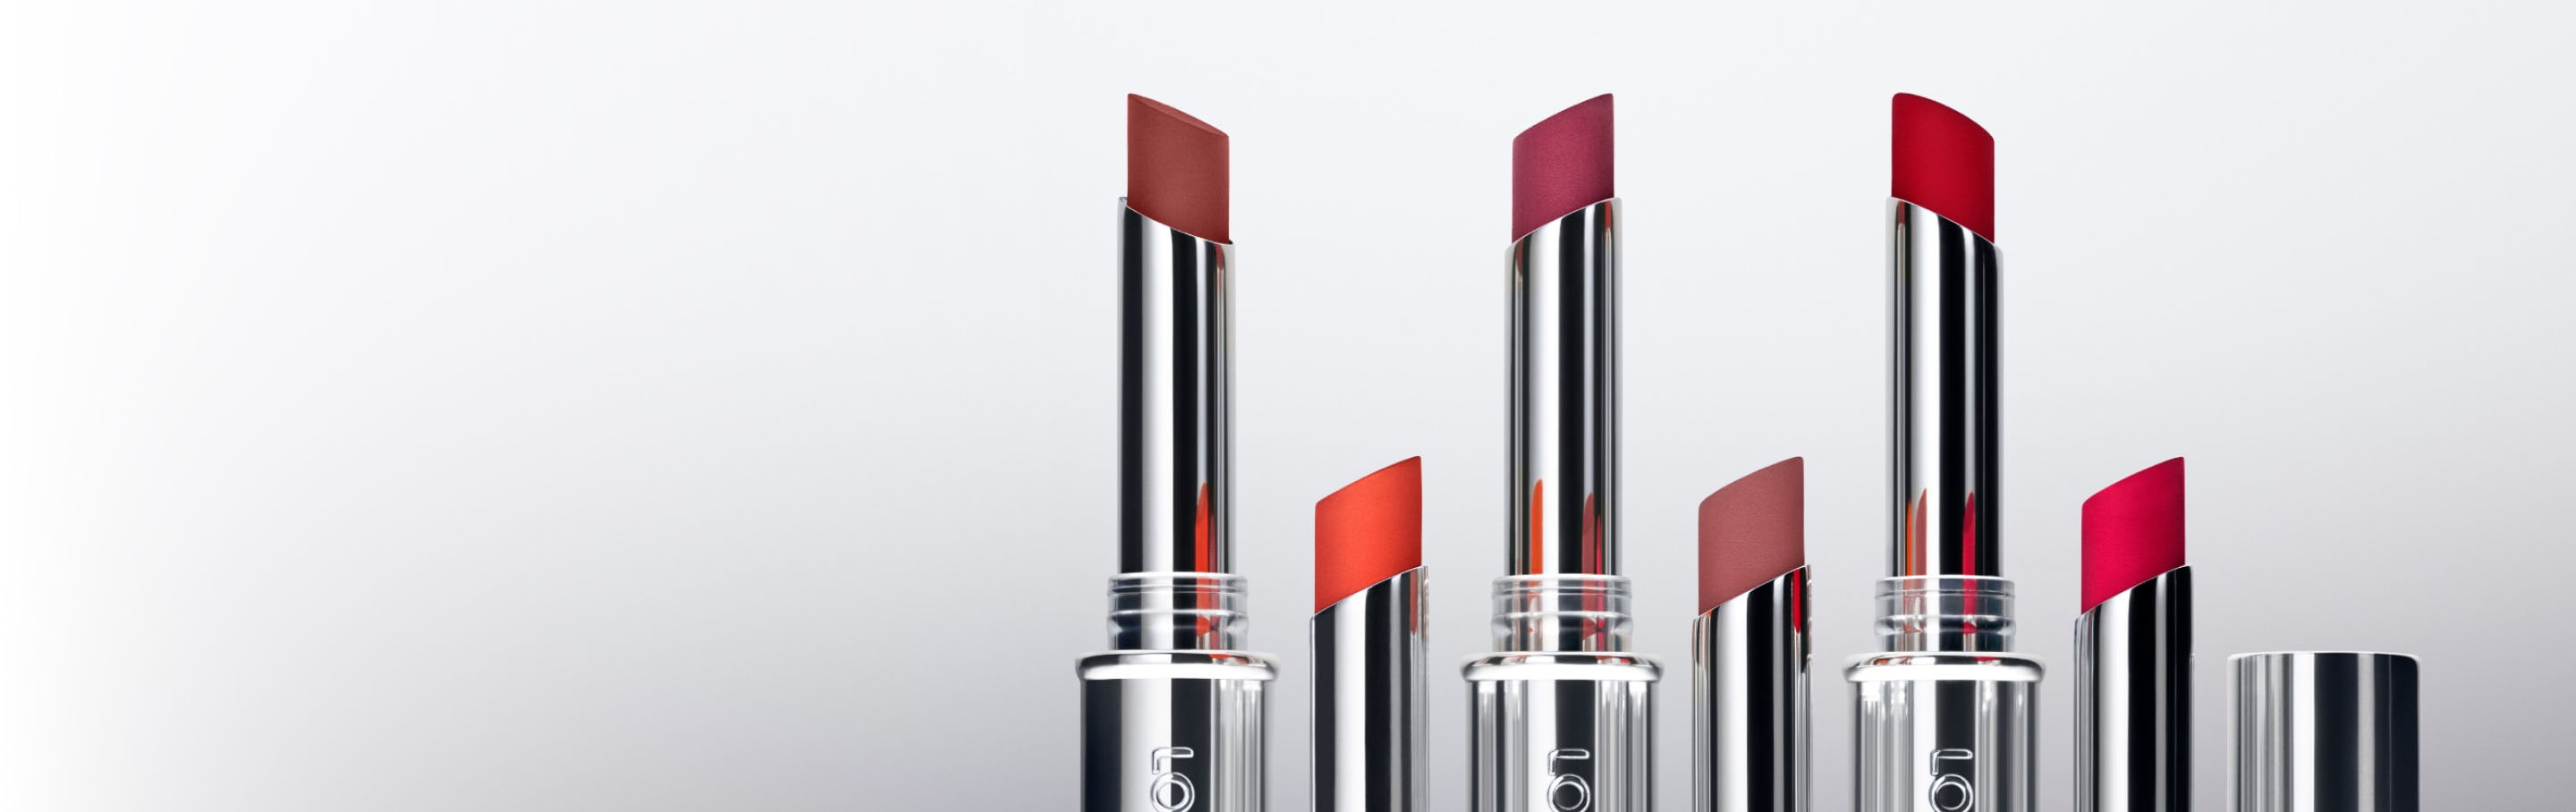 Locked Kiss Lipstick product image